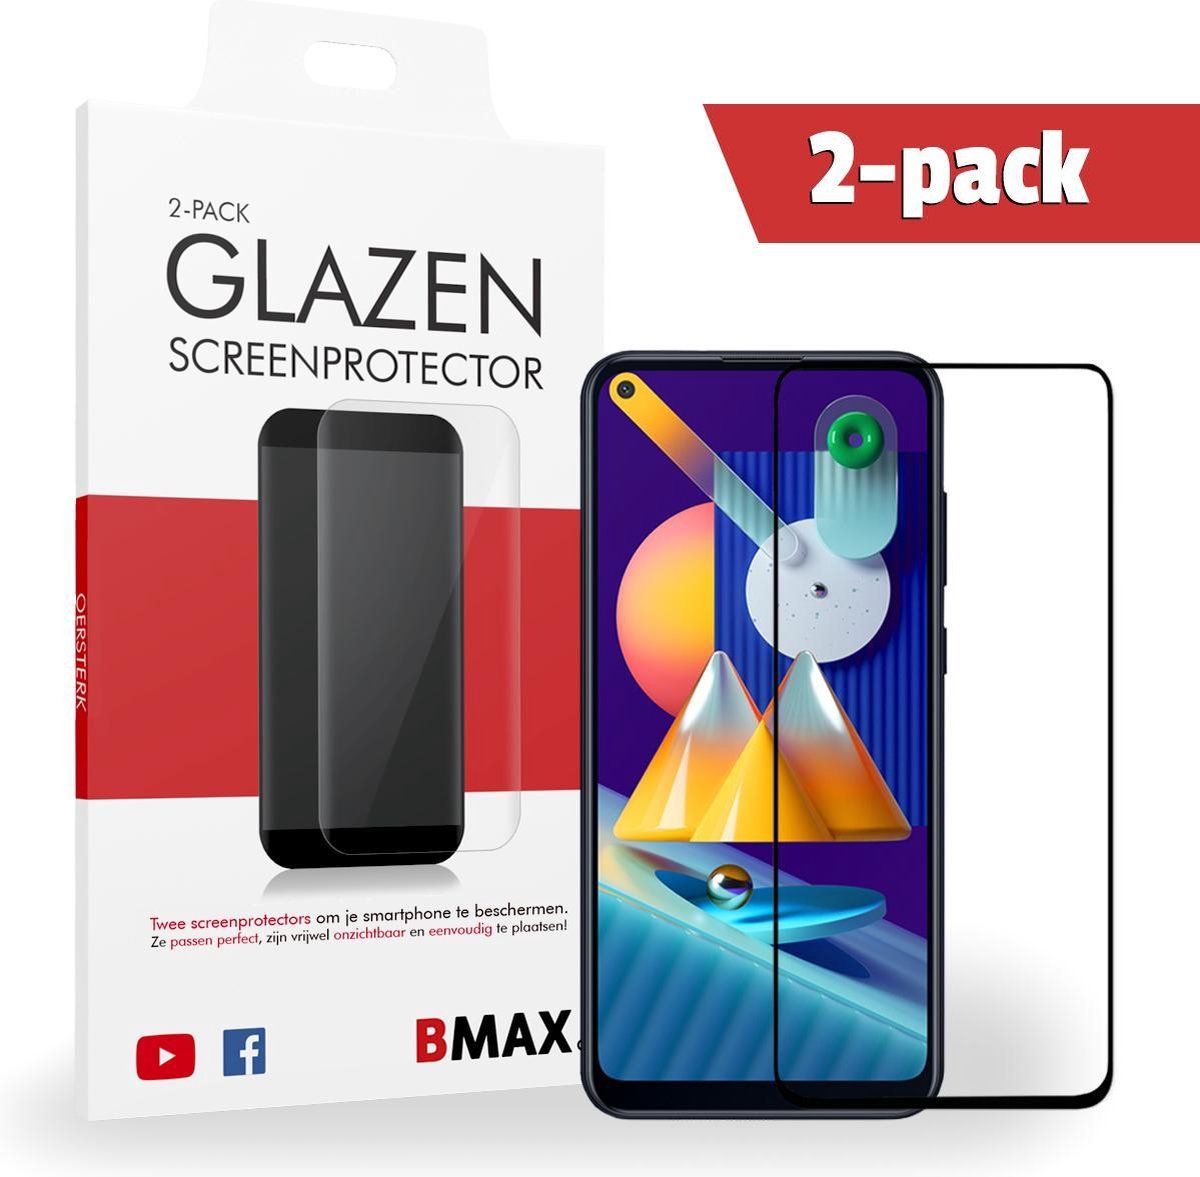 2-pack Bmax Samsung M11 Screenprotector - Glass - Full Cover 2.5d - Black